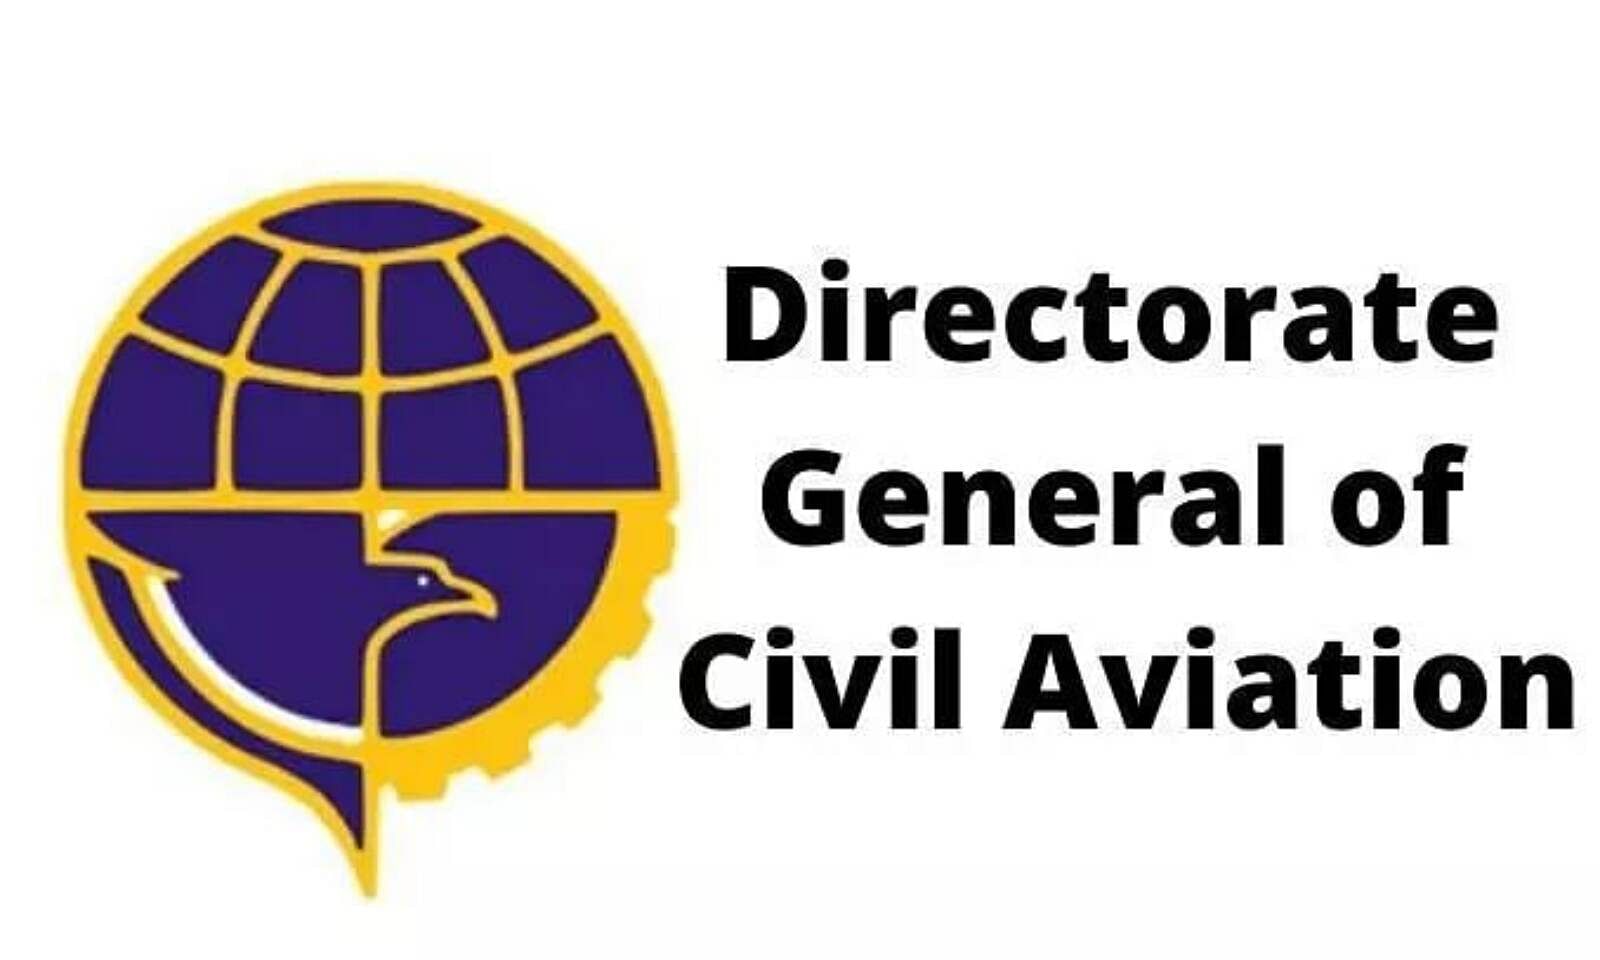 DG Civil Aviation approves new apron at Rajkot Airport to park 6 aircraft